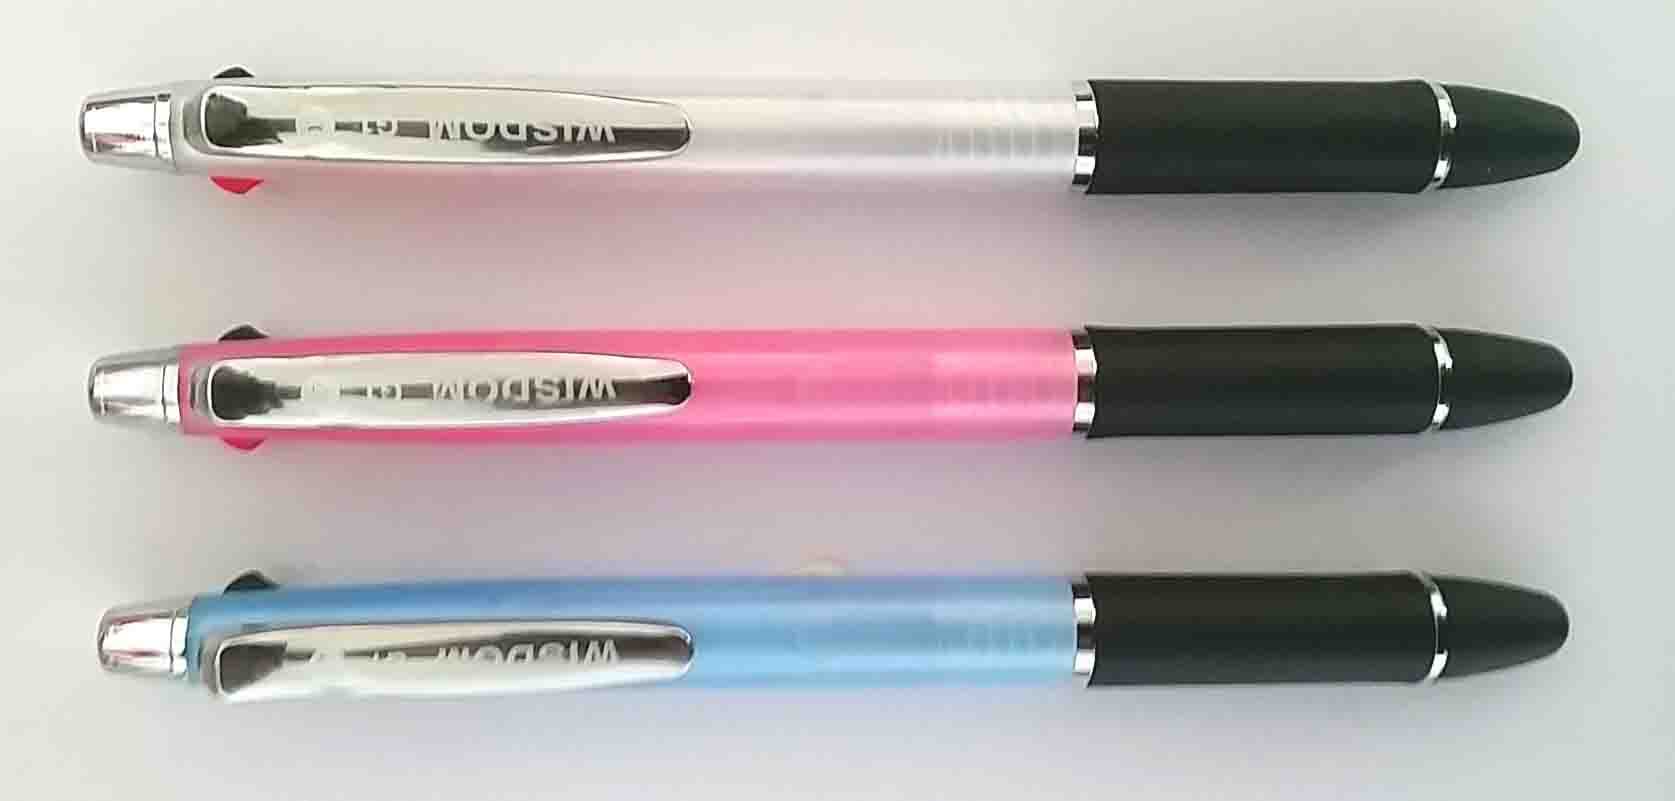 WIS-S888 Multi Function Pen